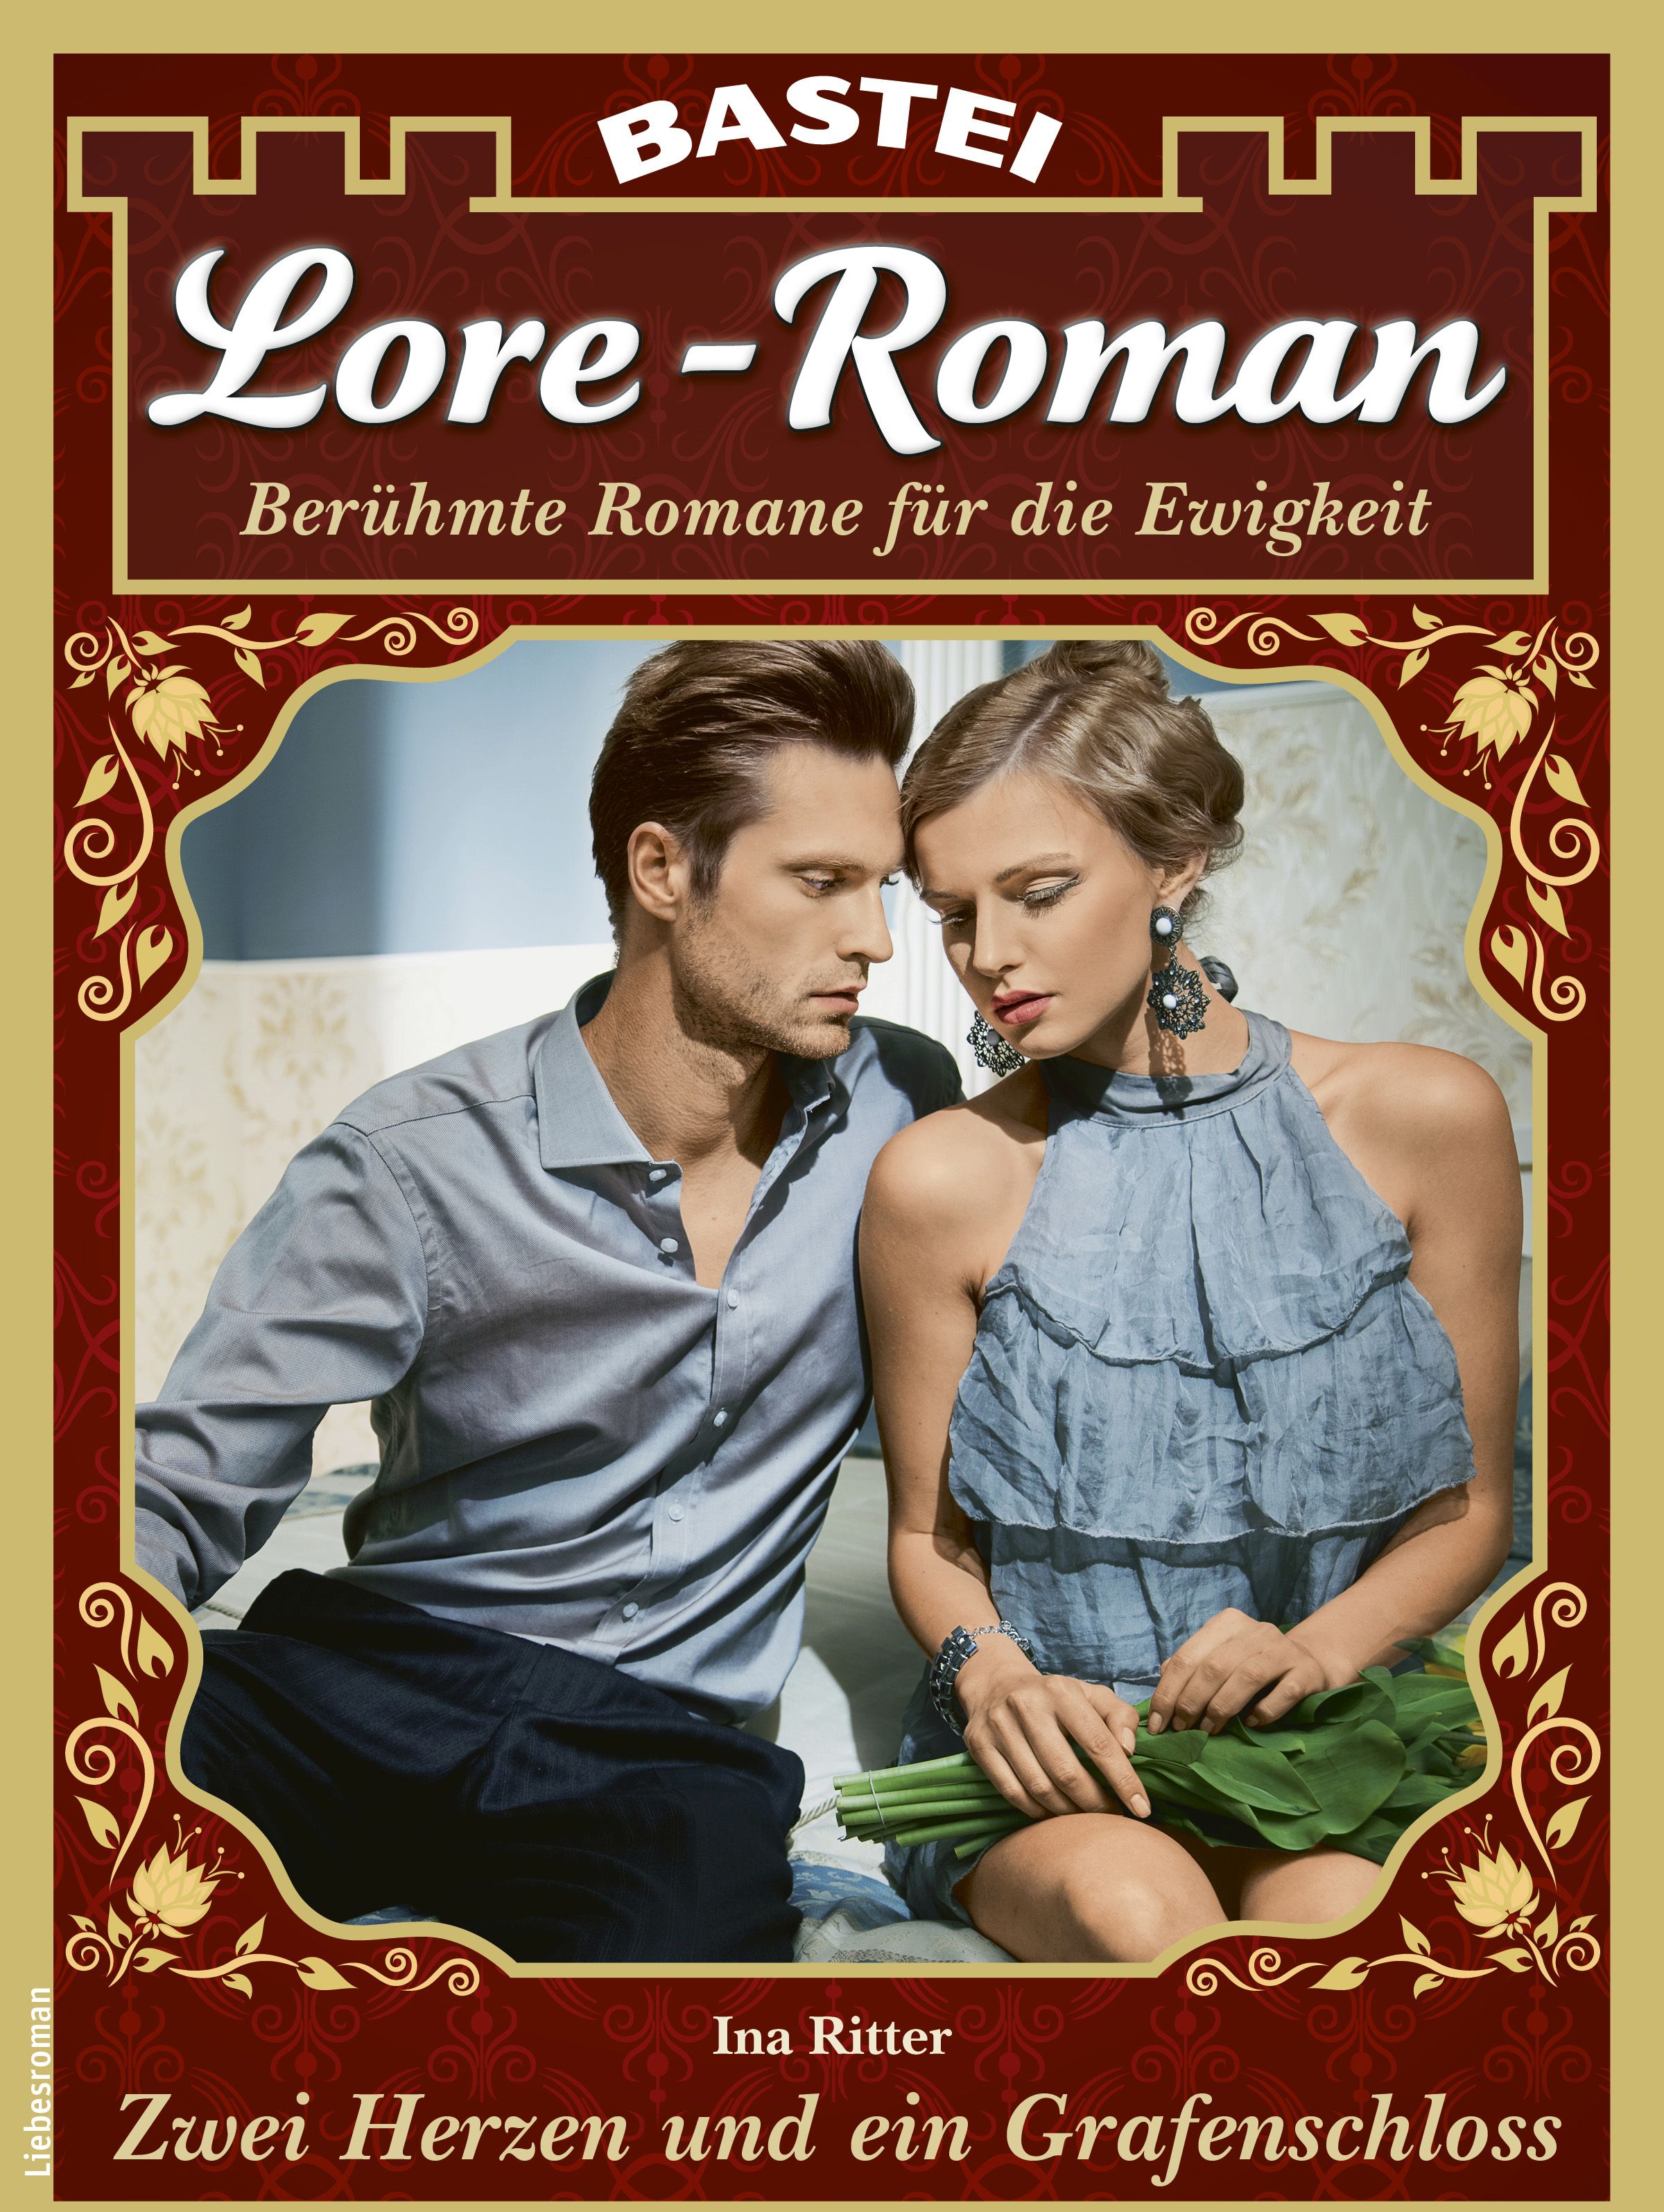 Lore-Roman 134